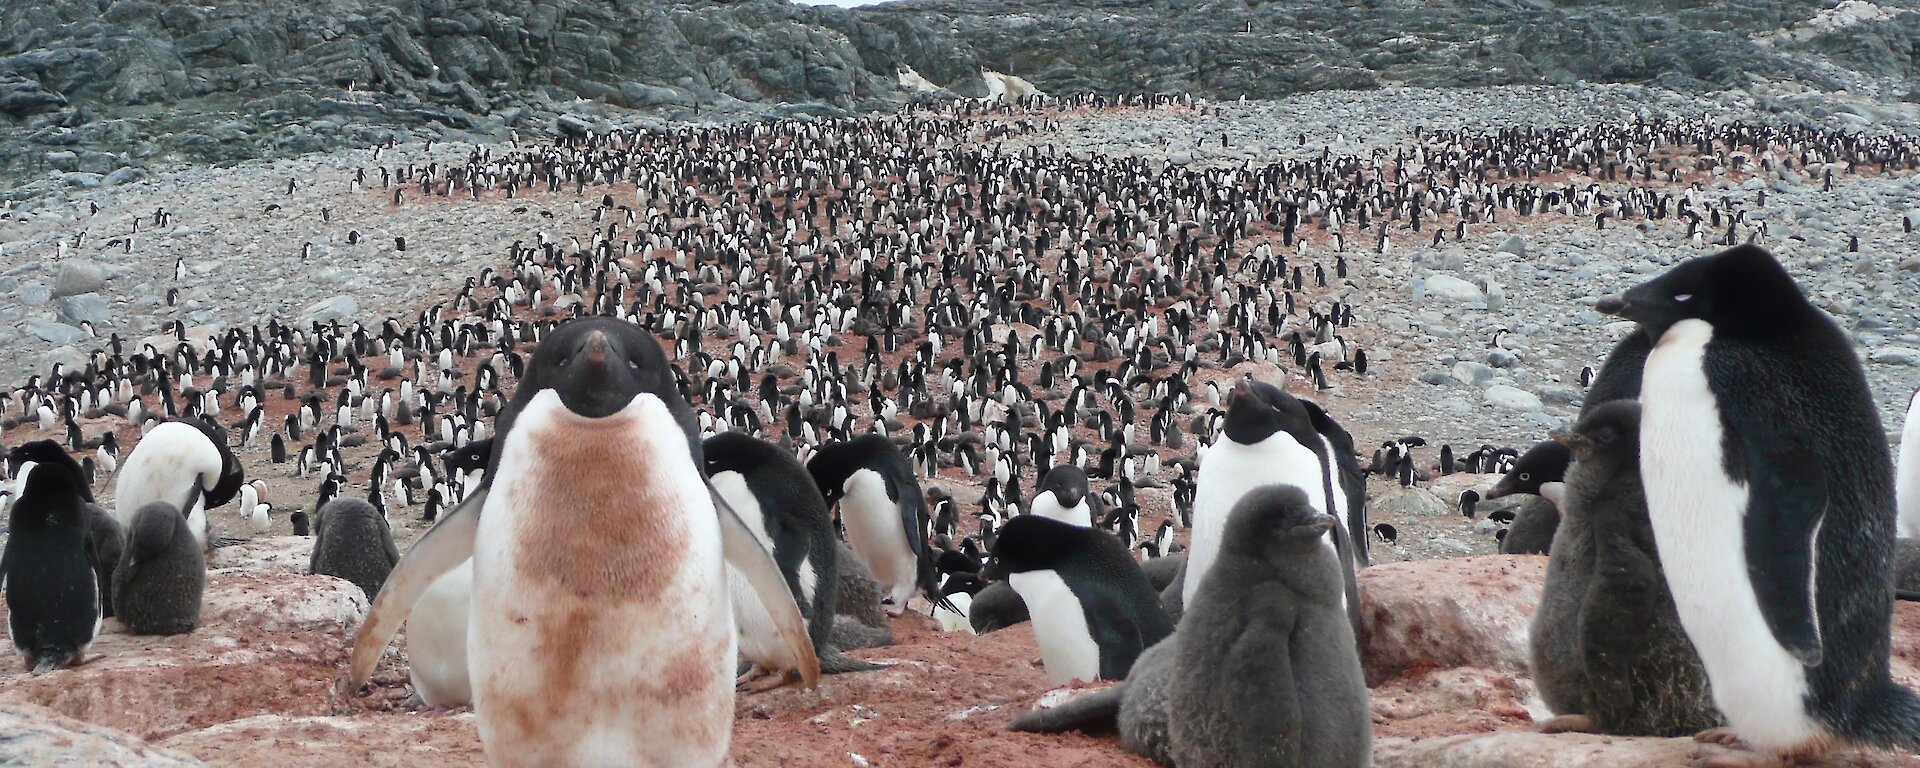 An Adelie penguin colony near Casey station.